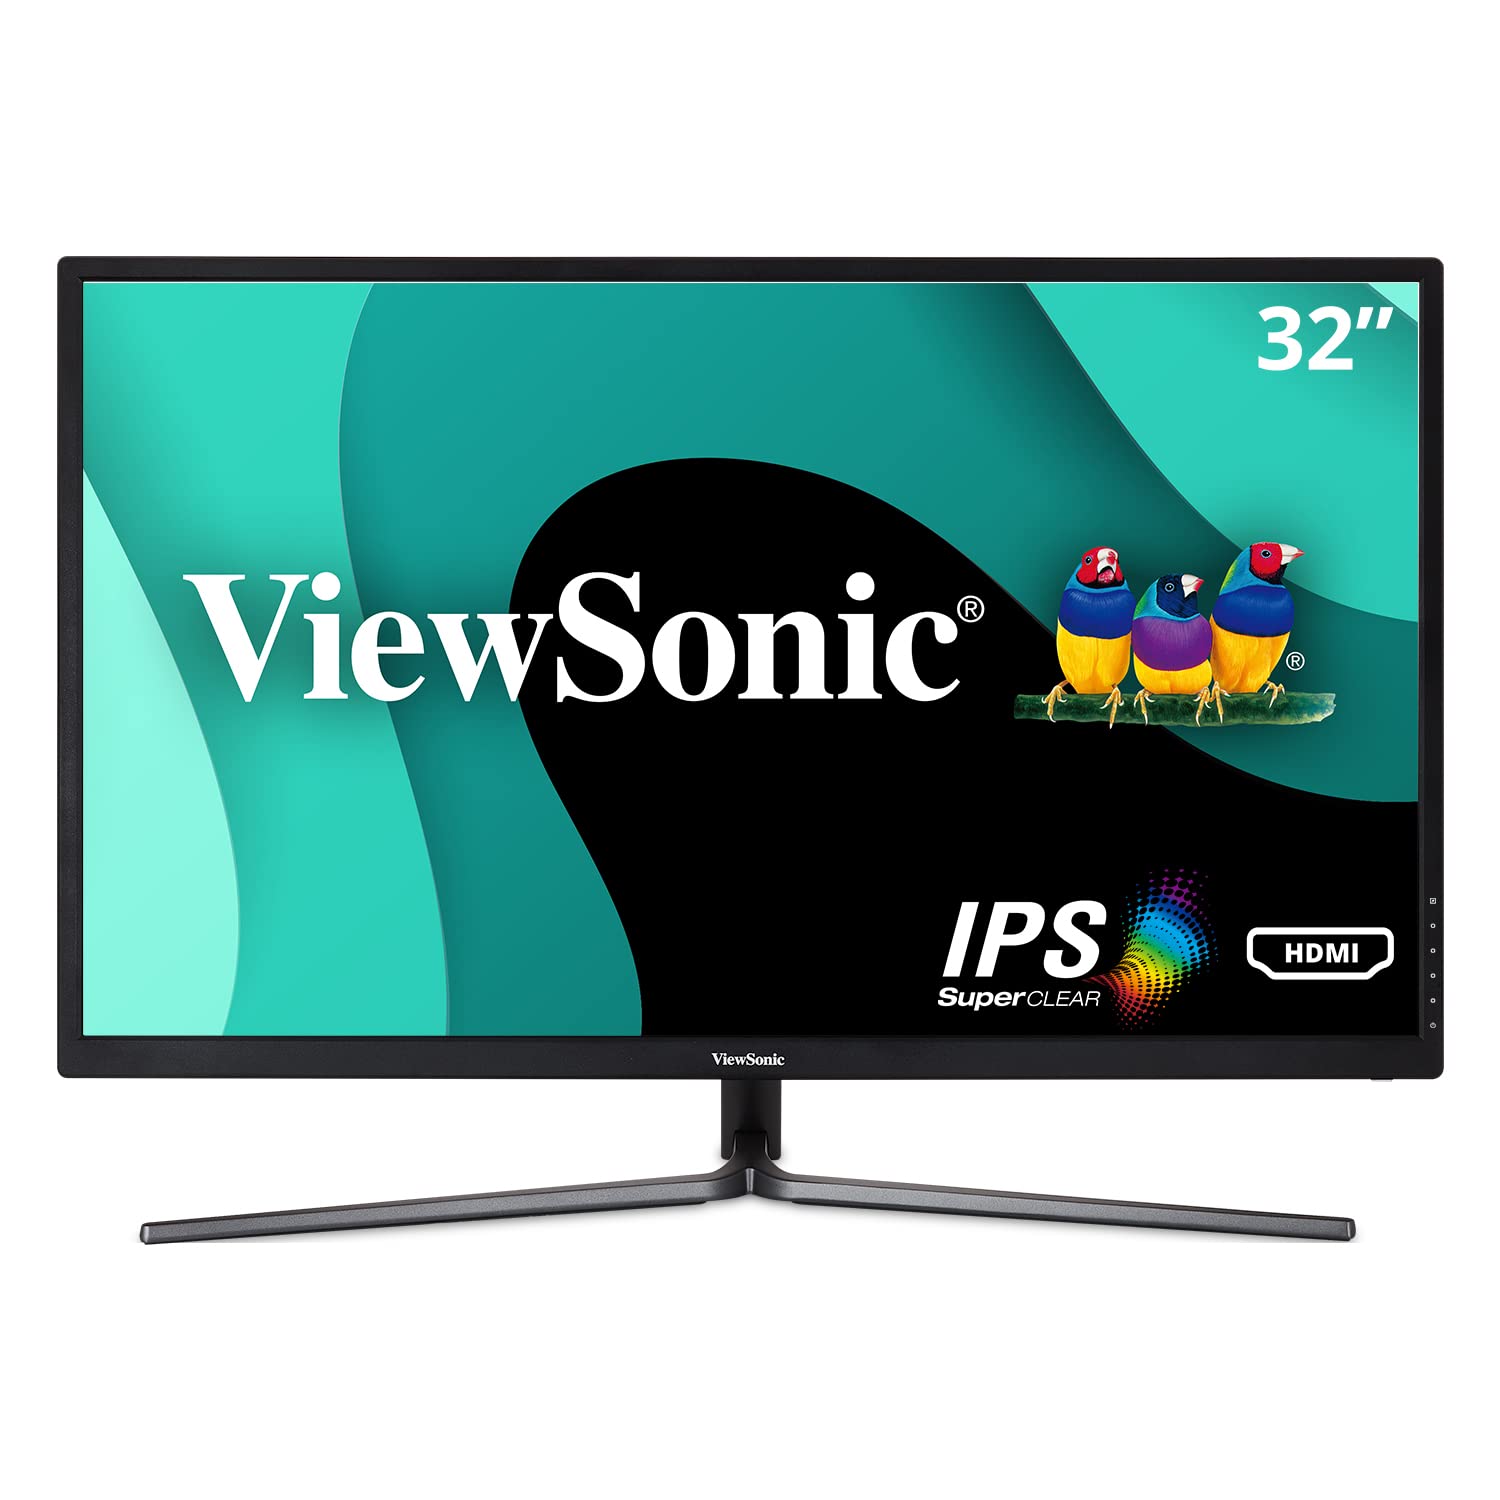 Viewsonic VX3211-2K-MHD 32 Inch IPS WQHD 1440p Monitor ...